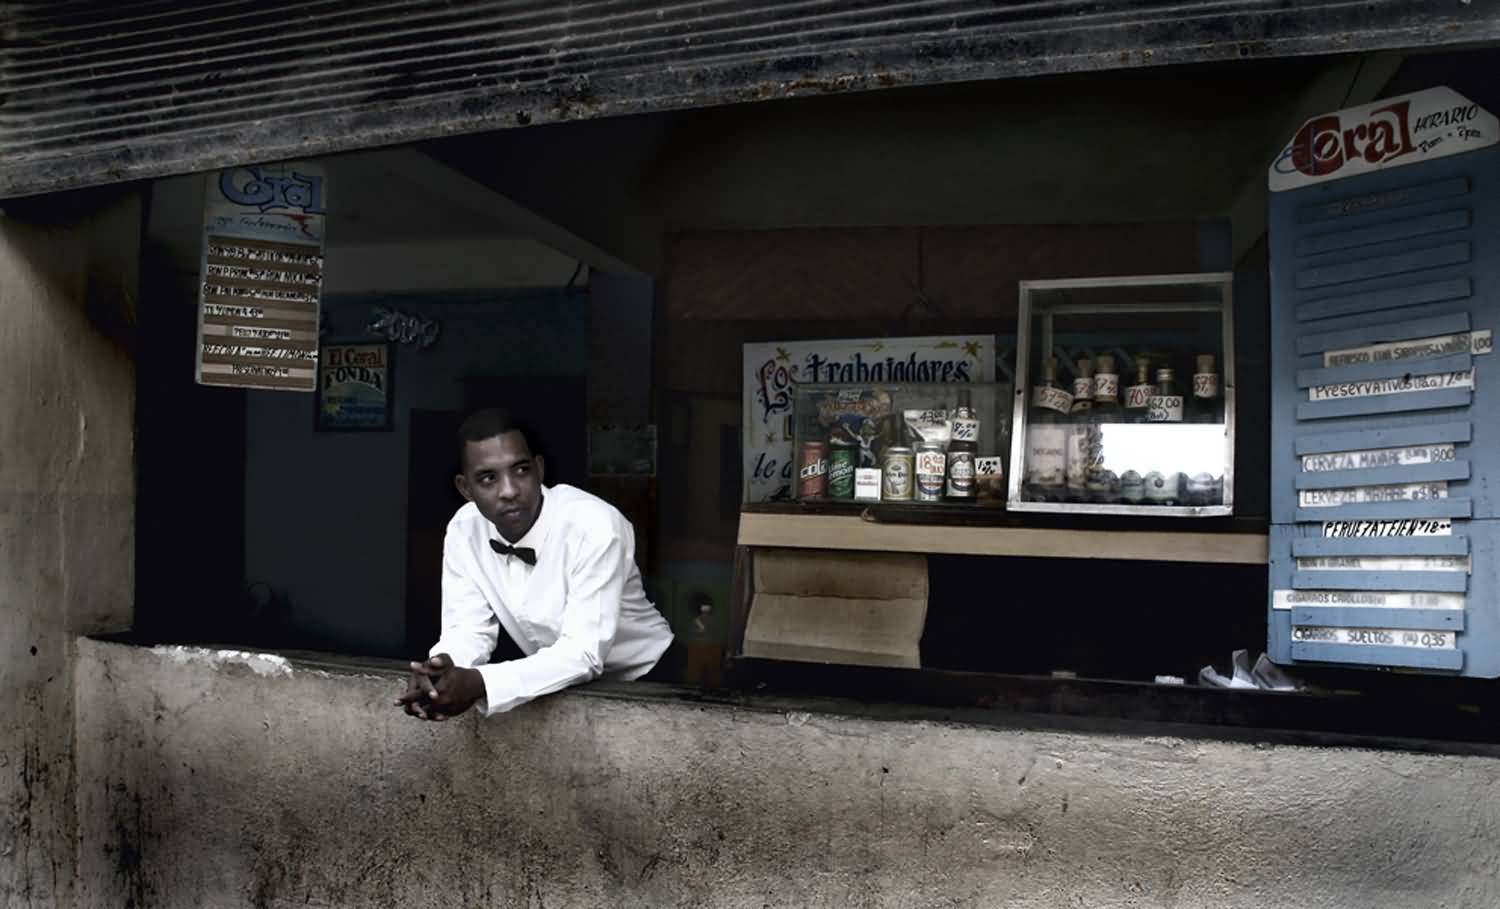 معرض مزانجو المتجوّل بلا هدف للمصور كريستيان غاماشي